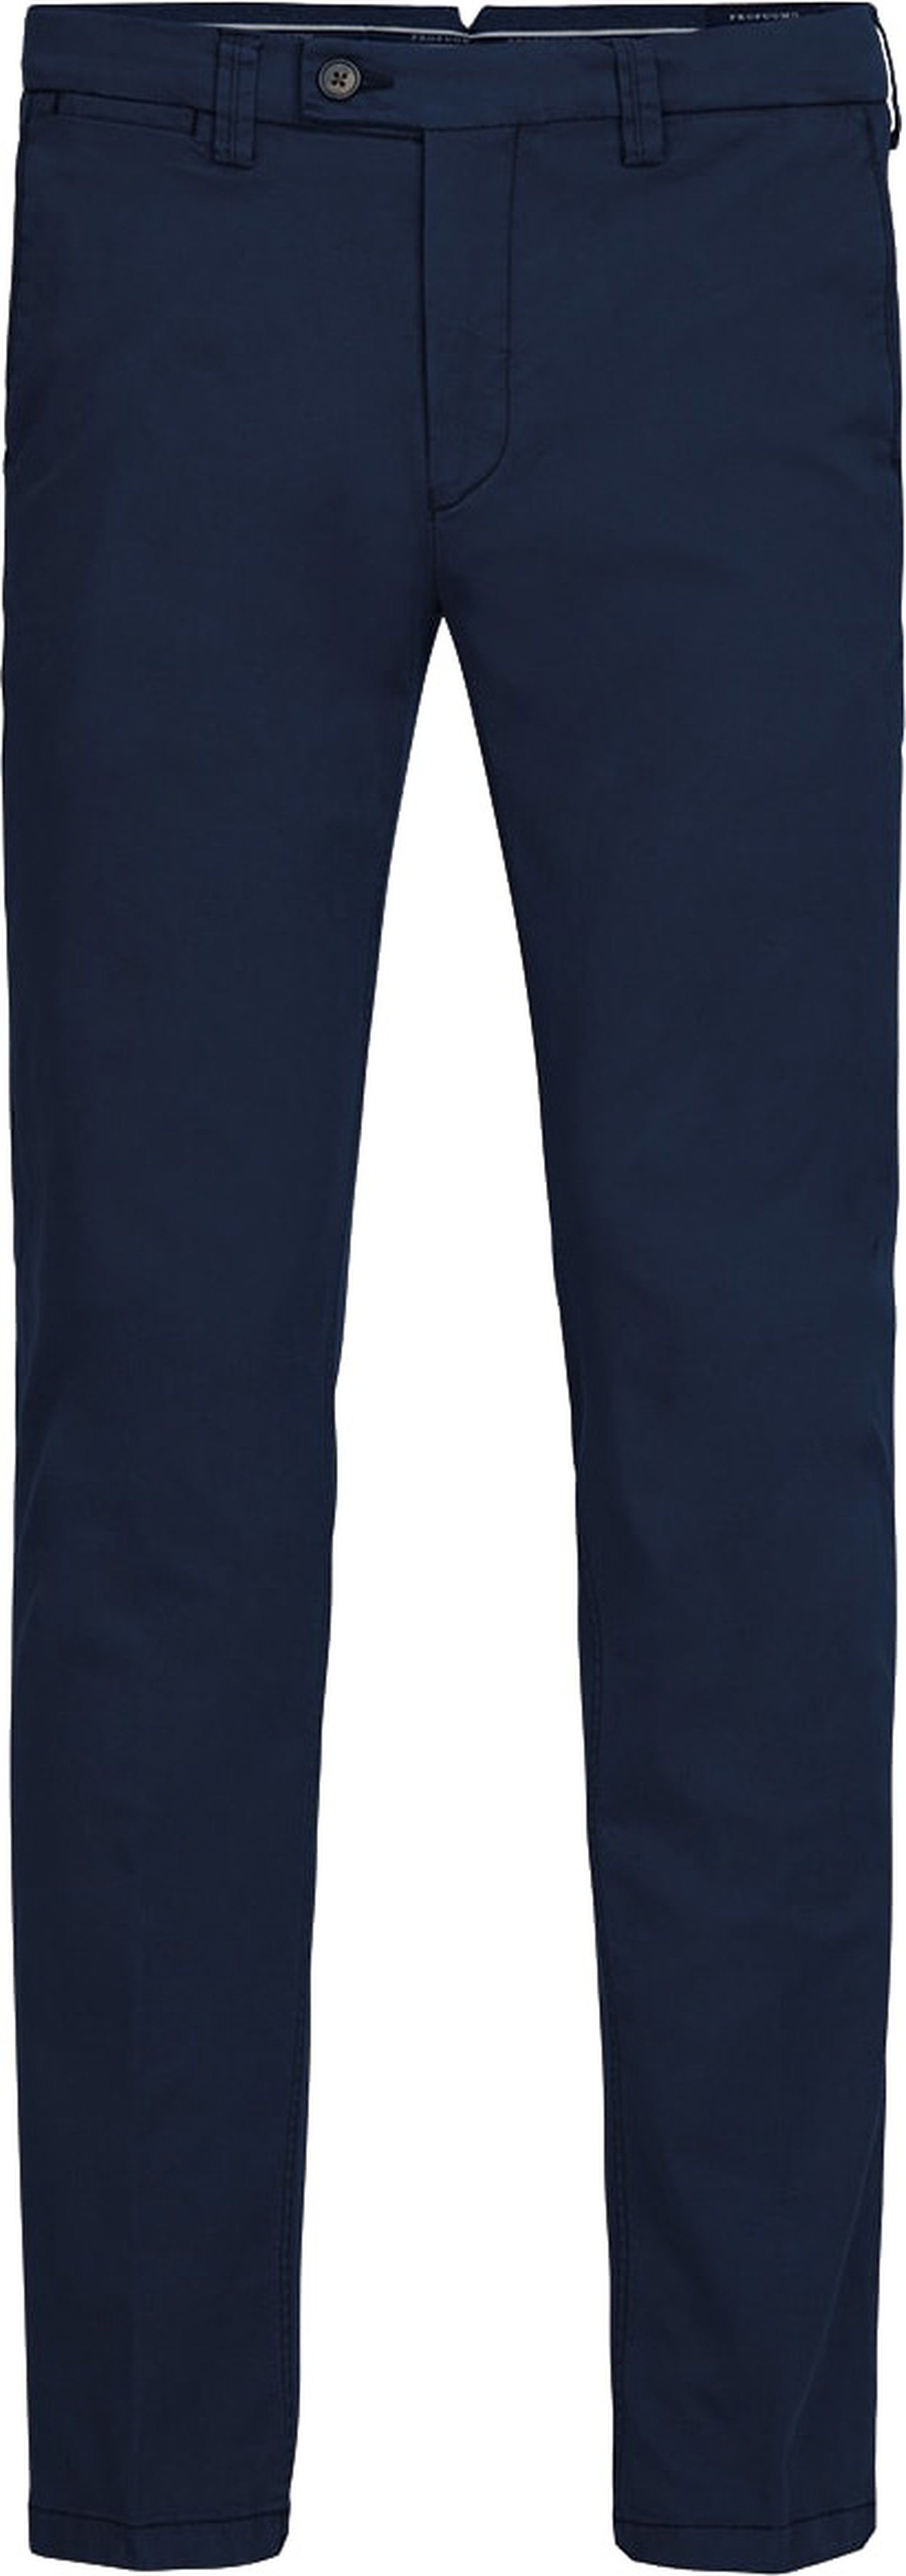 Profuomo Chino Garment DYE Navy Dark Blue Blue size W 33